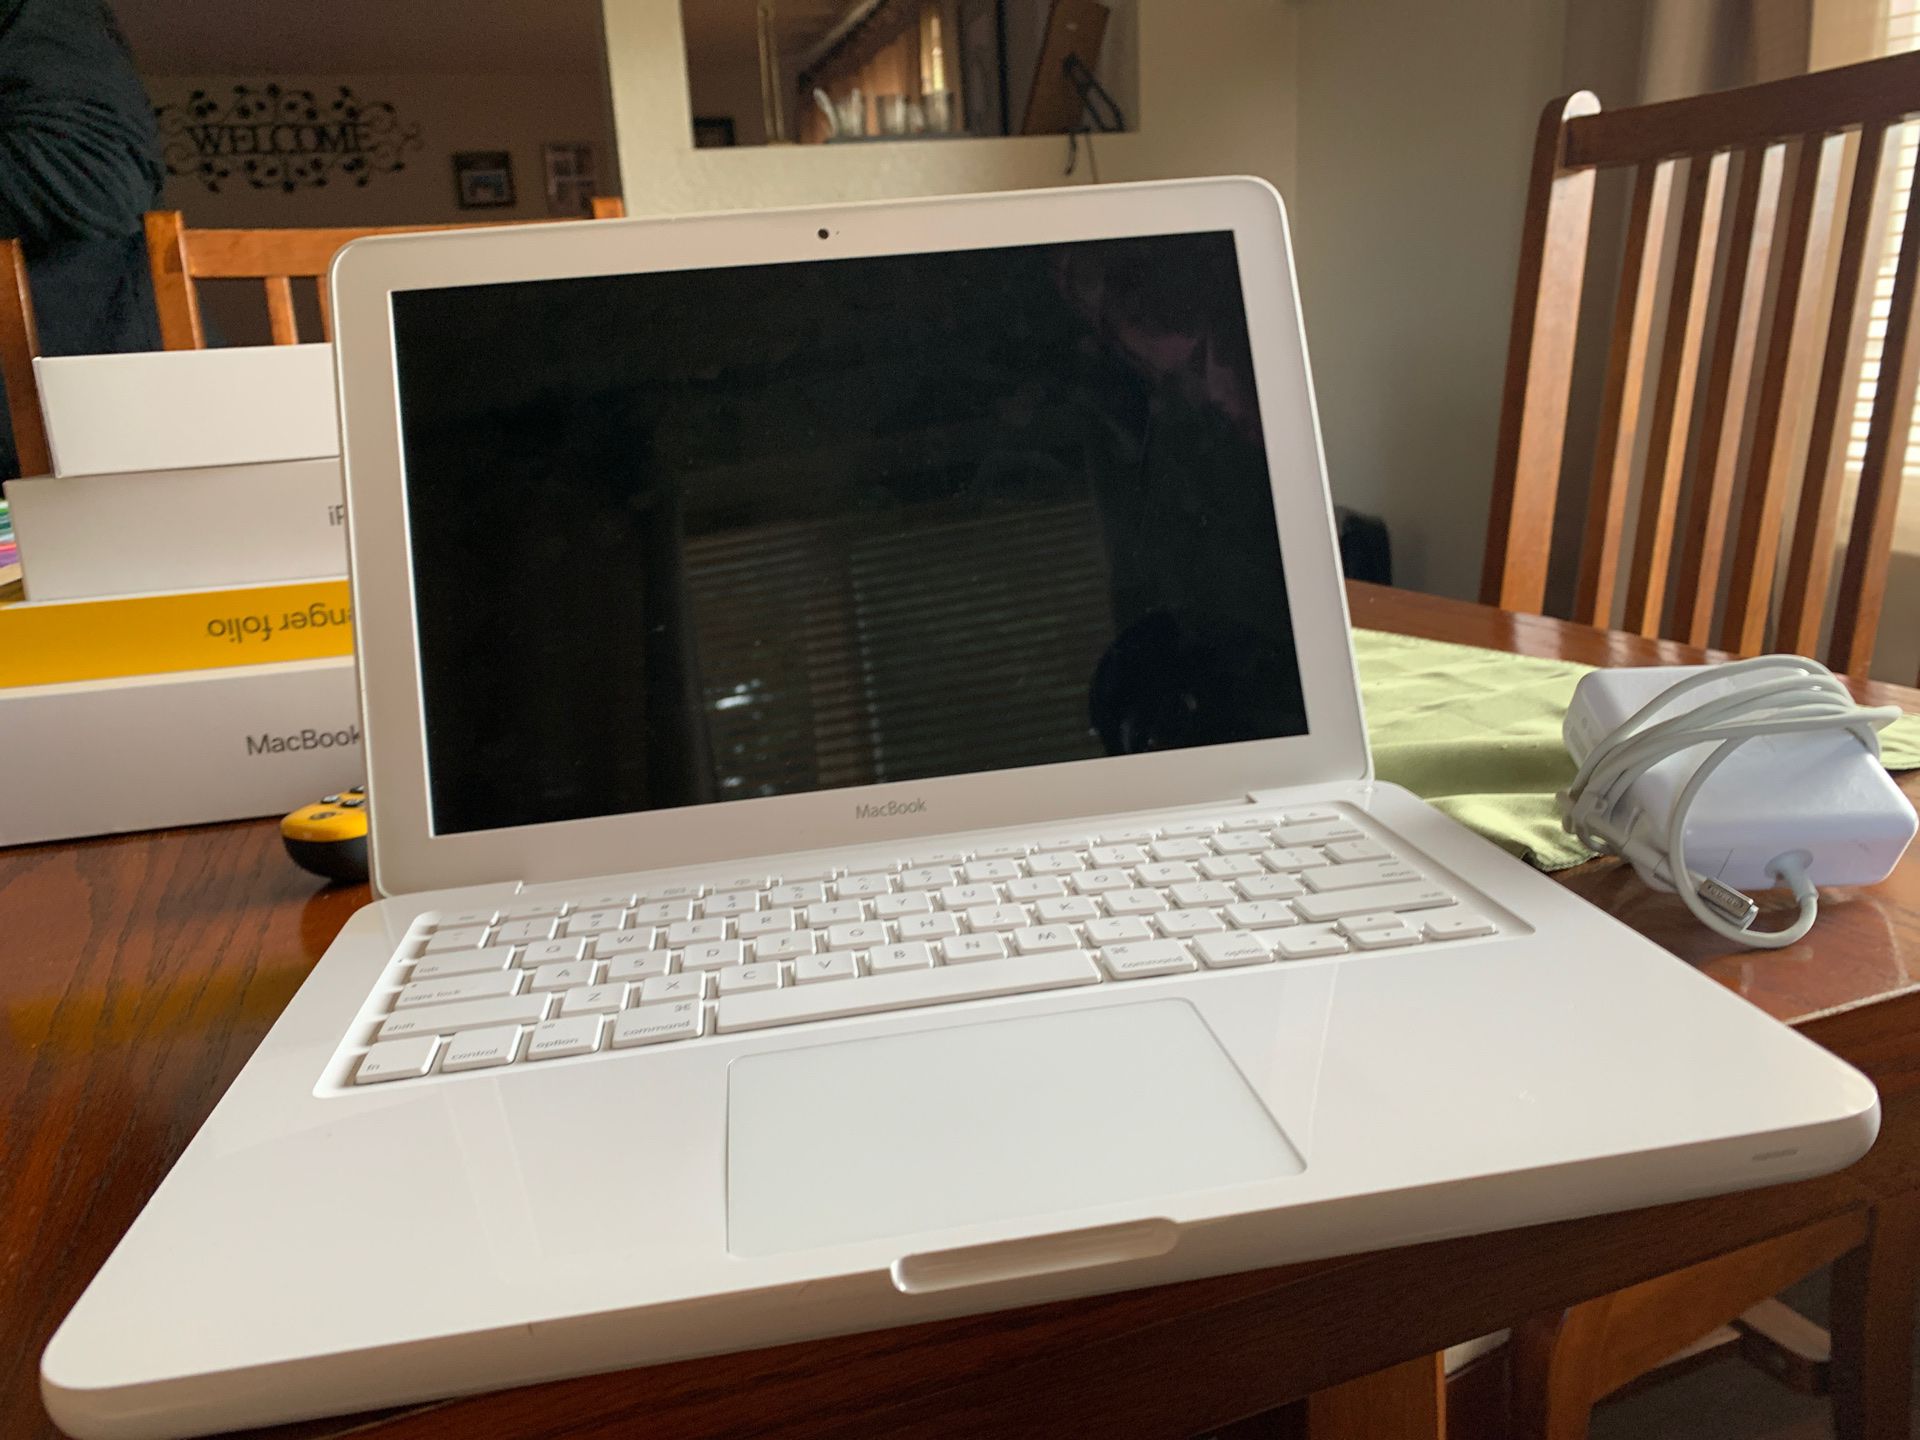 Mac book laptop